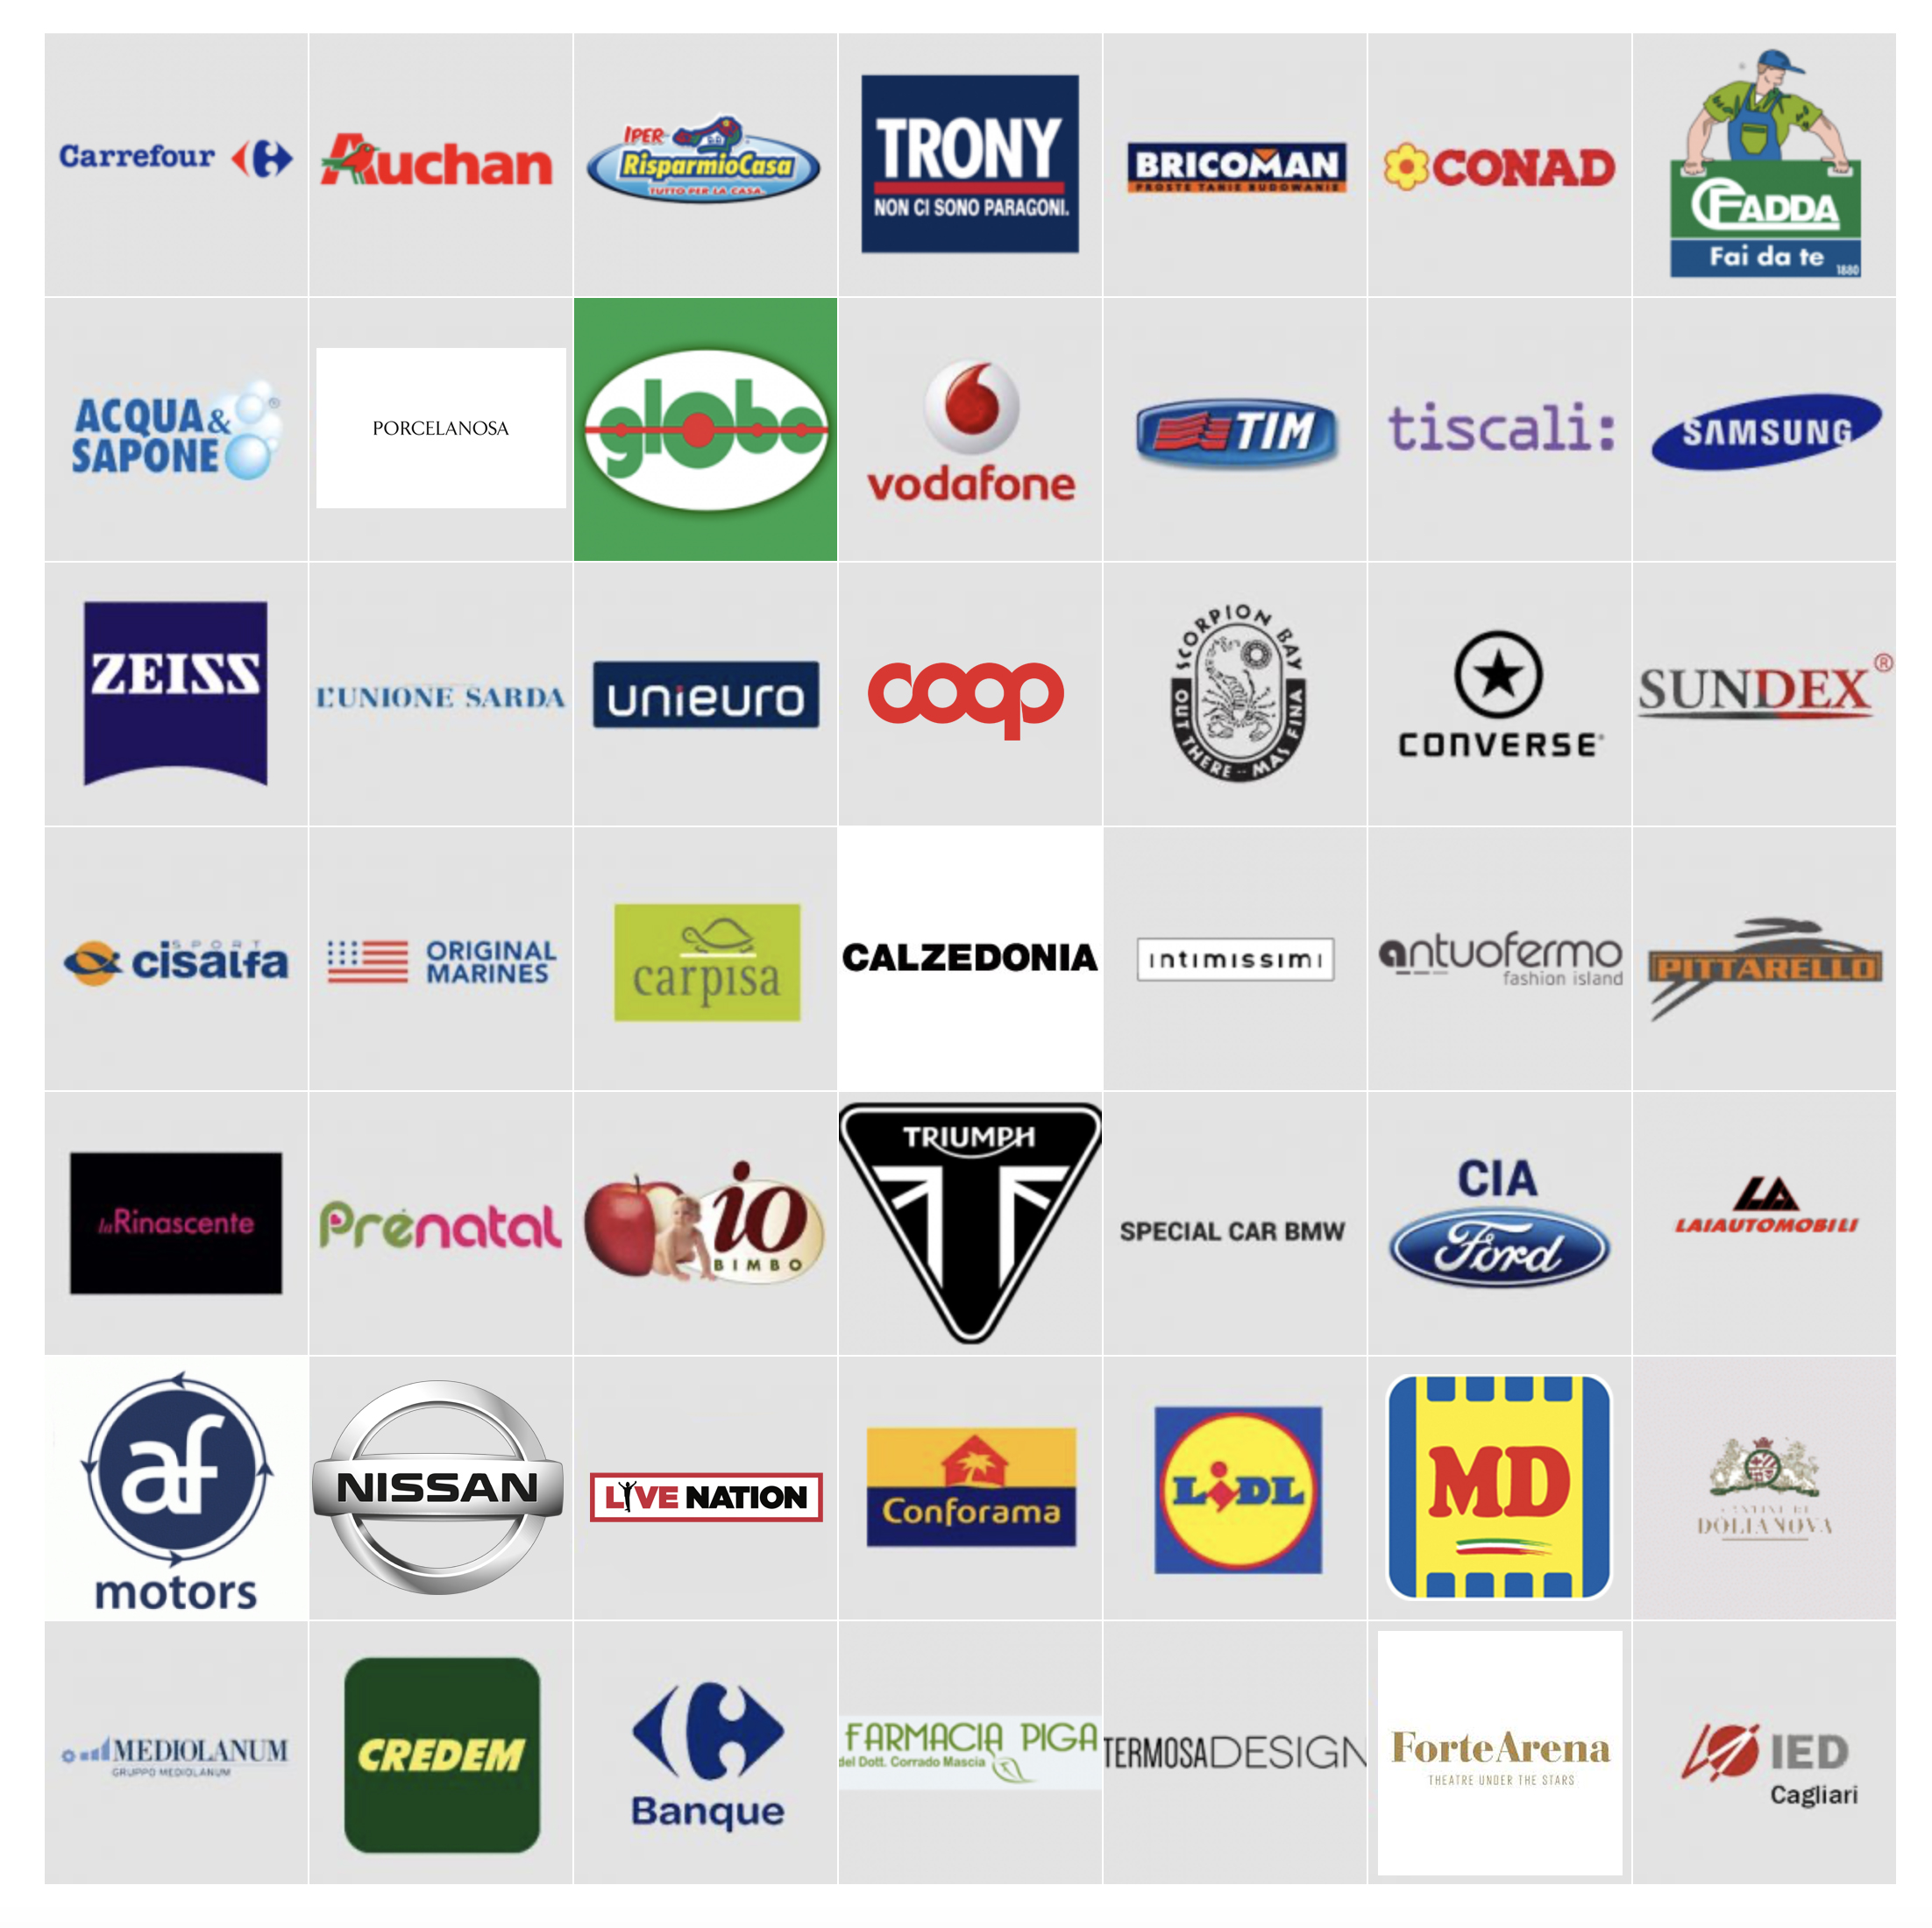 logos de los clientes como Carrefour, Auchan, converse, etc